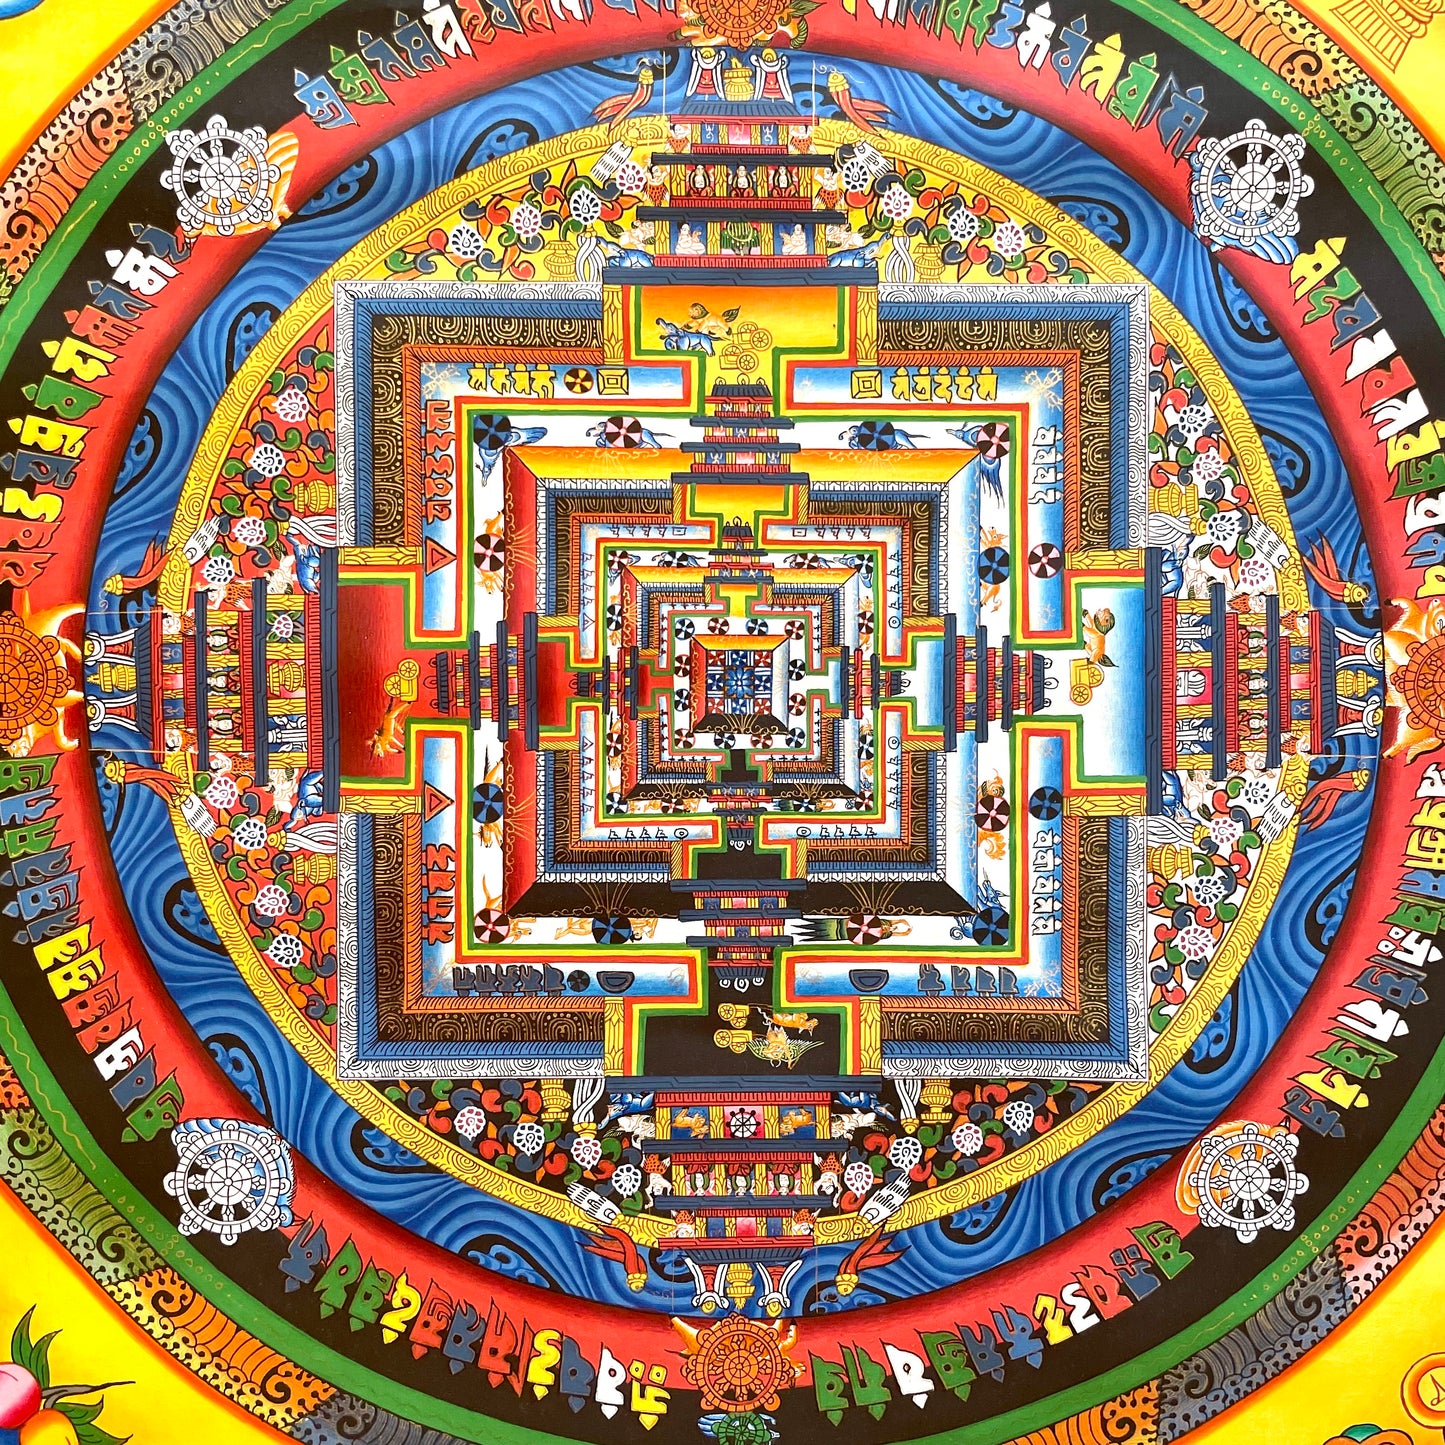 Original Kalachakra Mandala Thangka